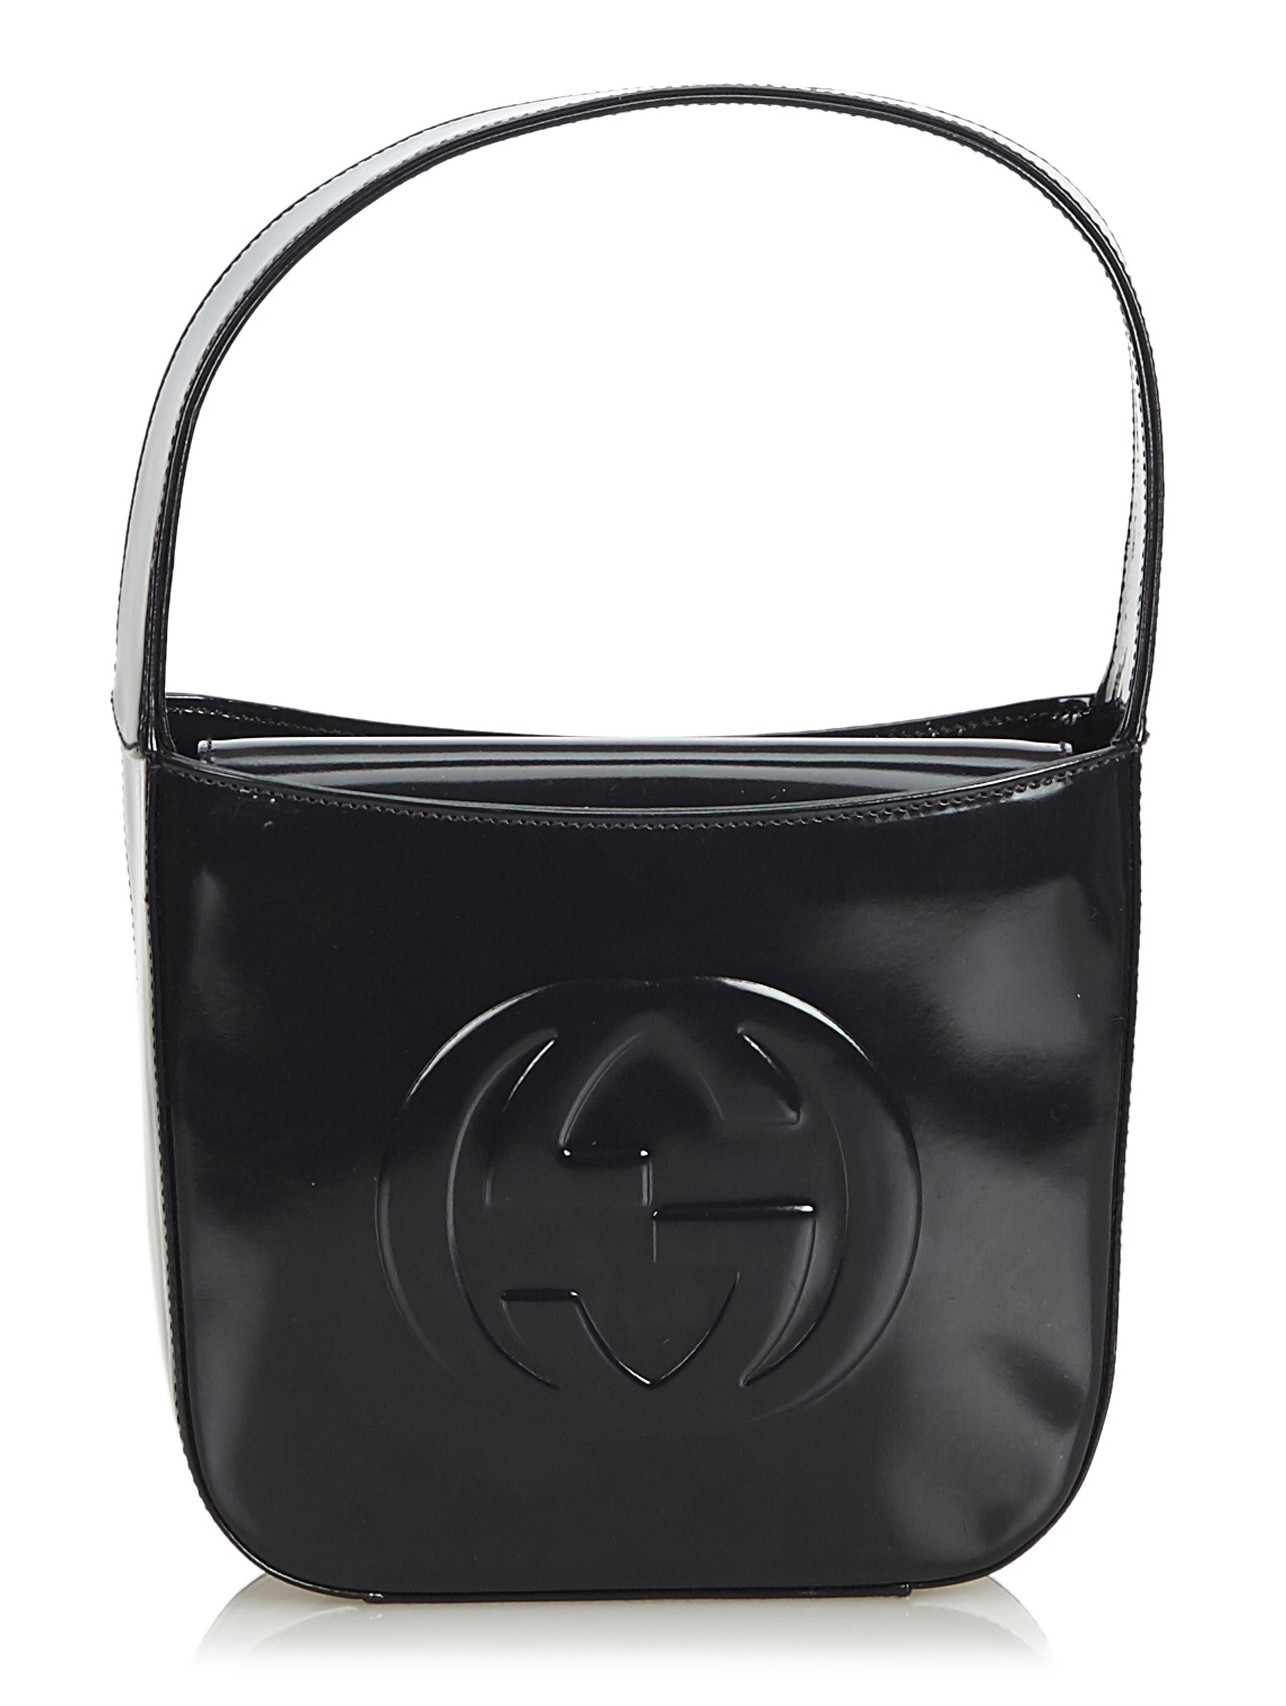 gucci black leather bag